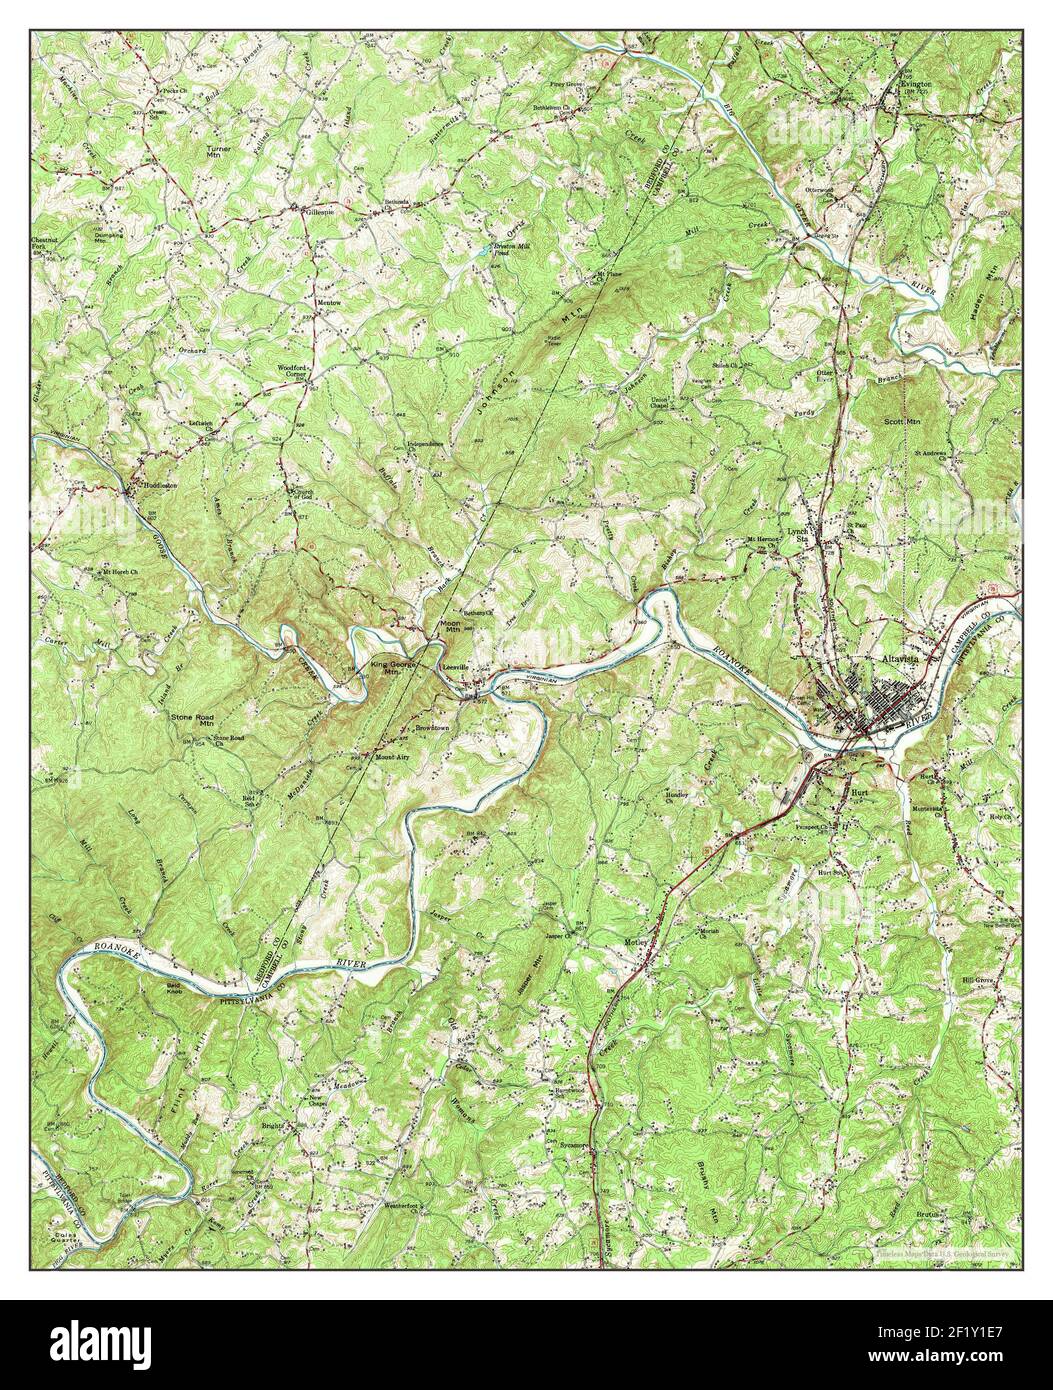 Altavista, Virginia, map 1951, 1:62500, United States of America by Timeless Maps, data U.S. Geological Survey Foto Stock